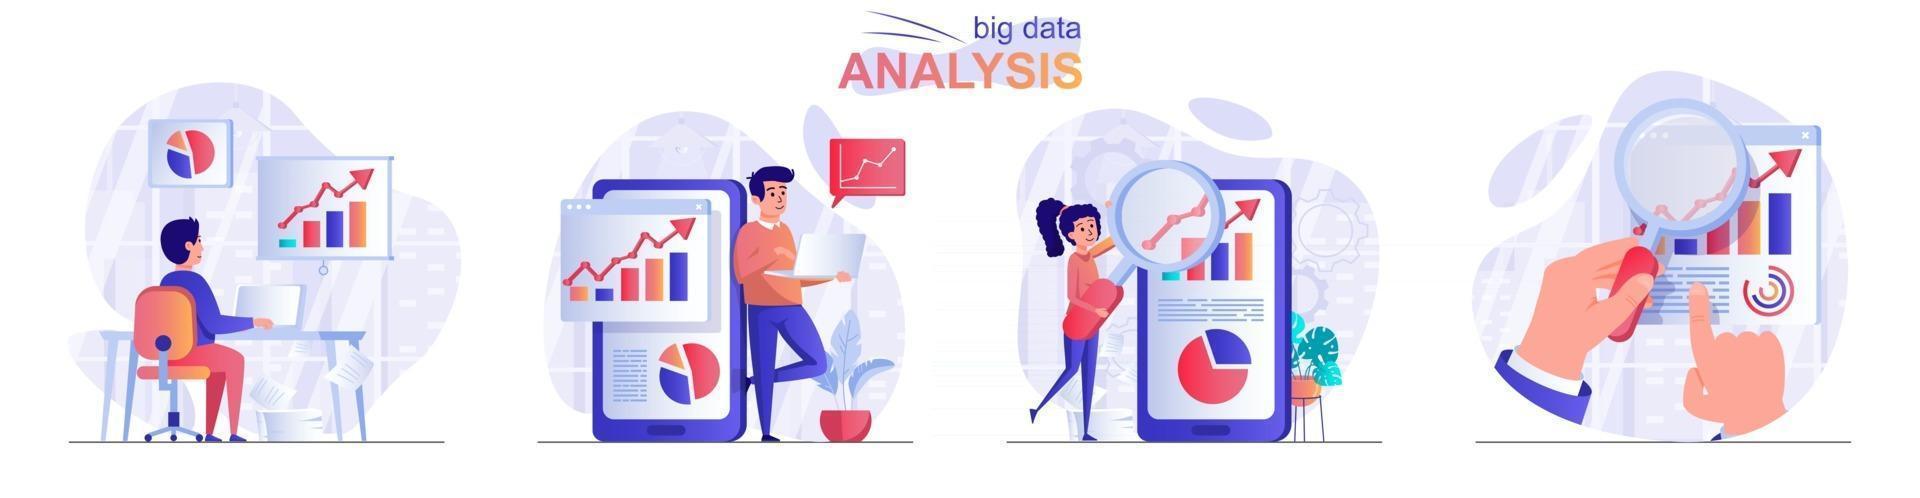 big data analyse concept scènes set vector